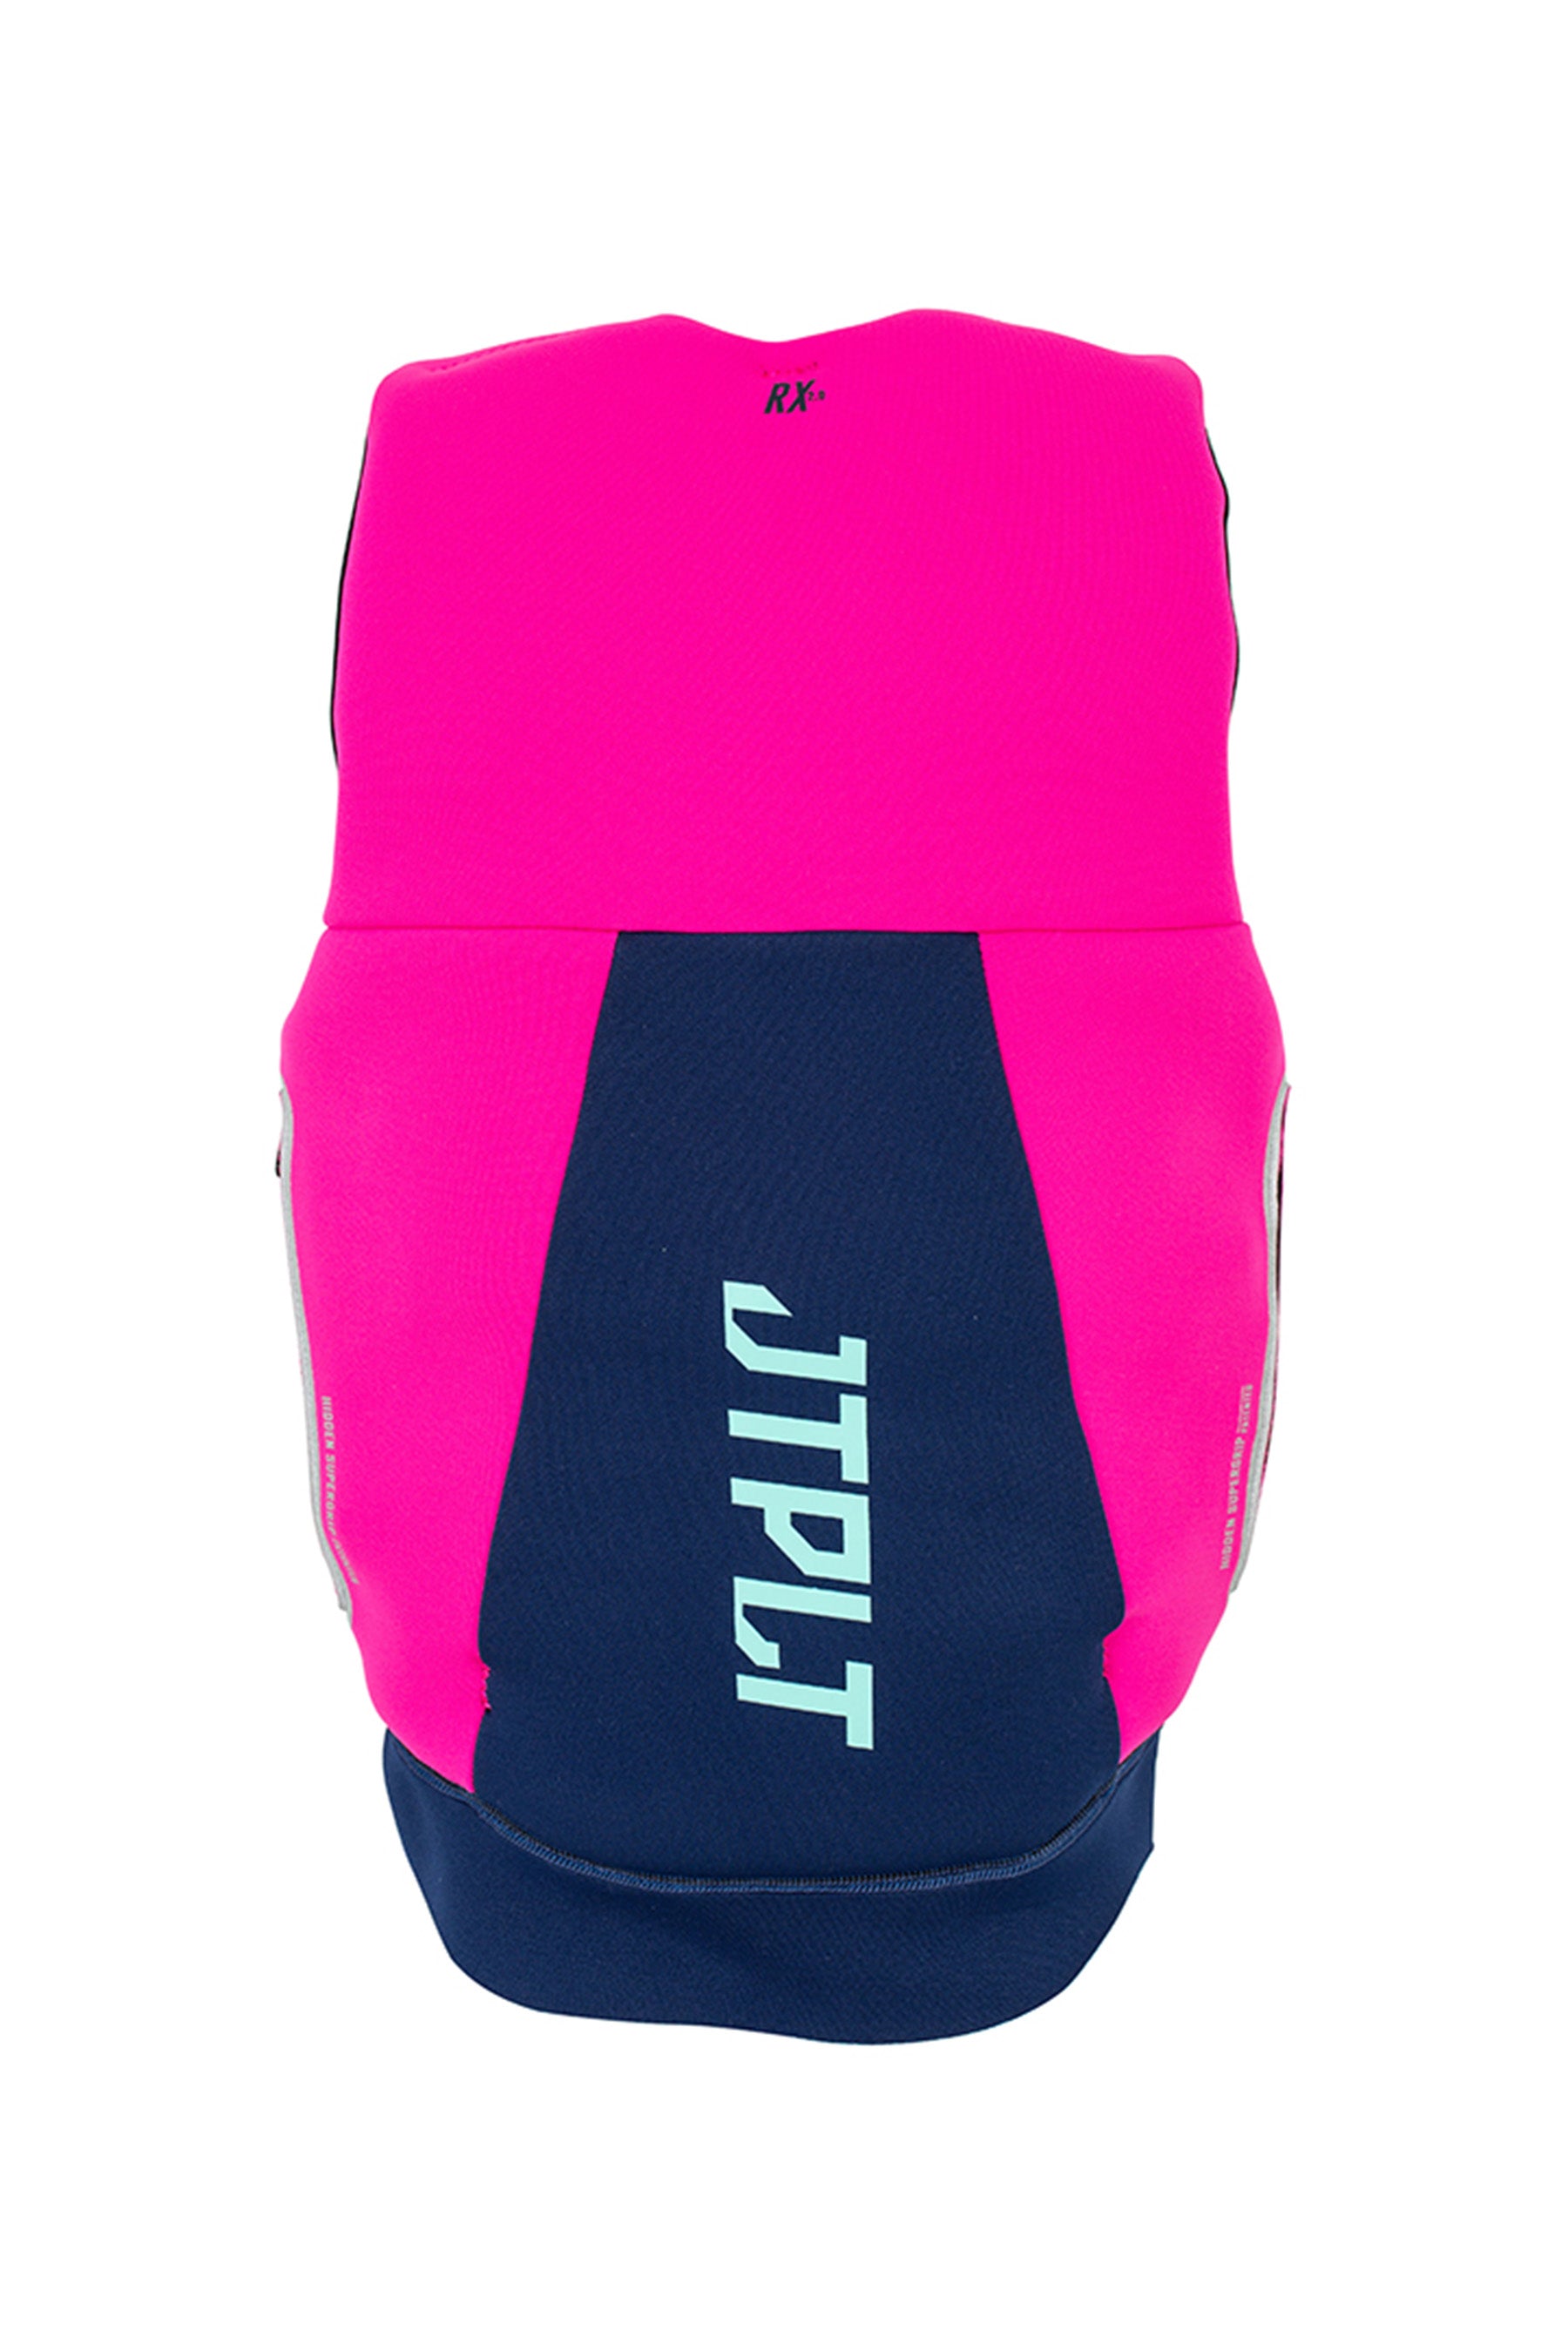 Jetpilot Rx Ladies Life Jacket - Navy/Pink 3